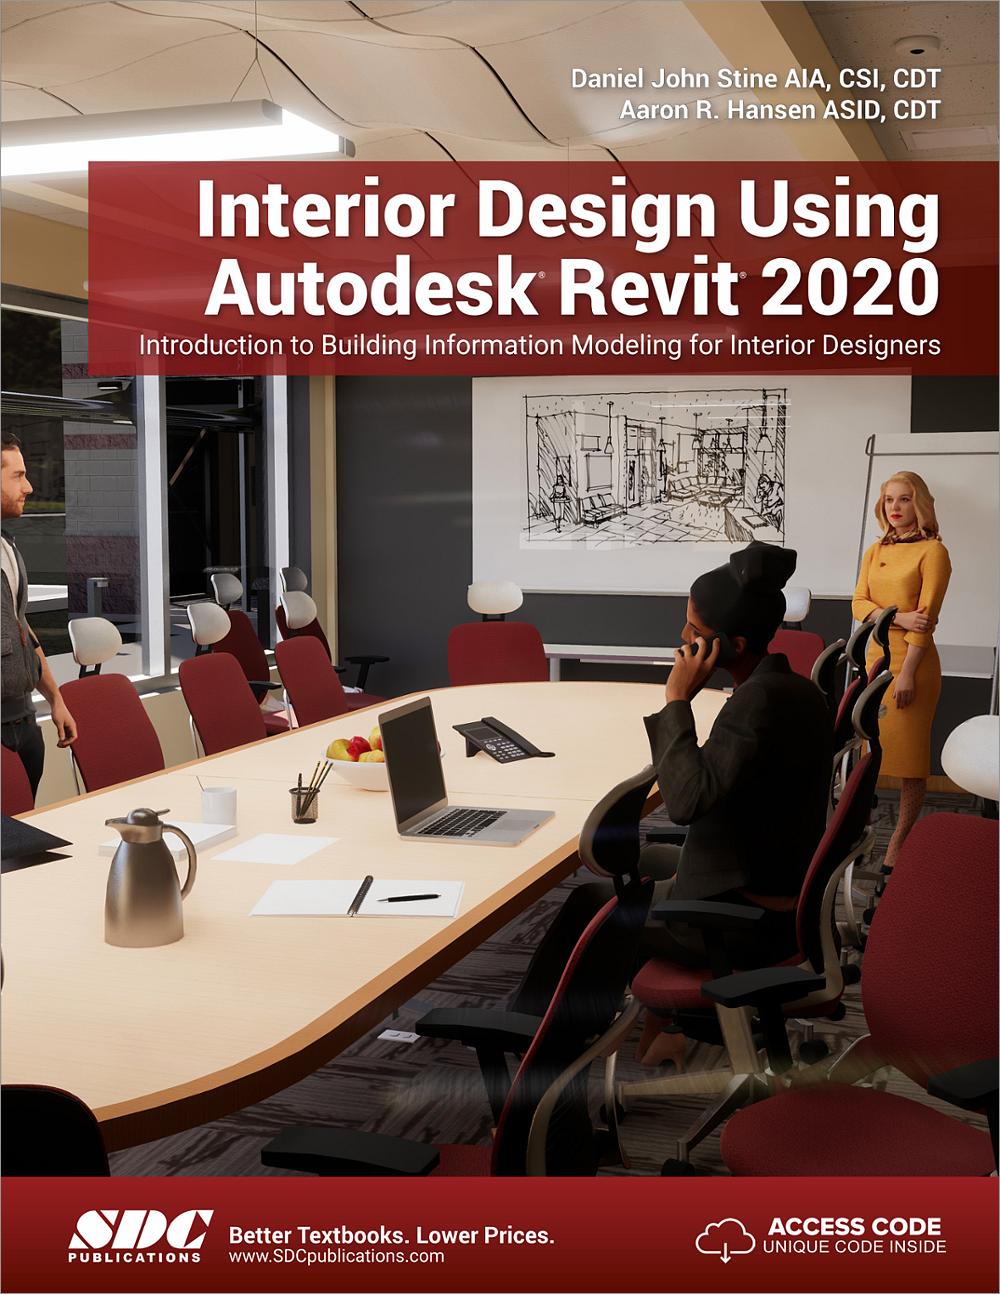 autodesk revit architecture 2014 price